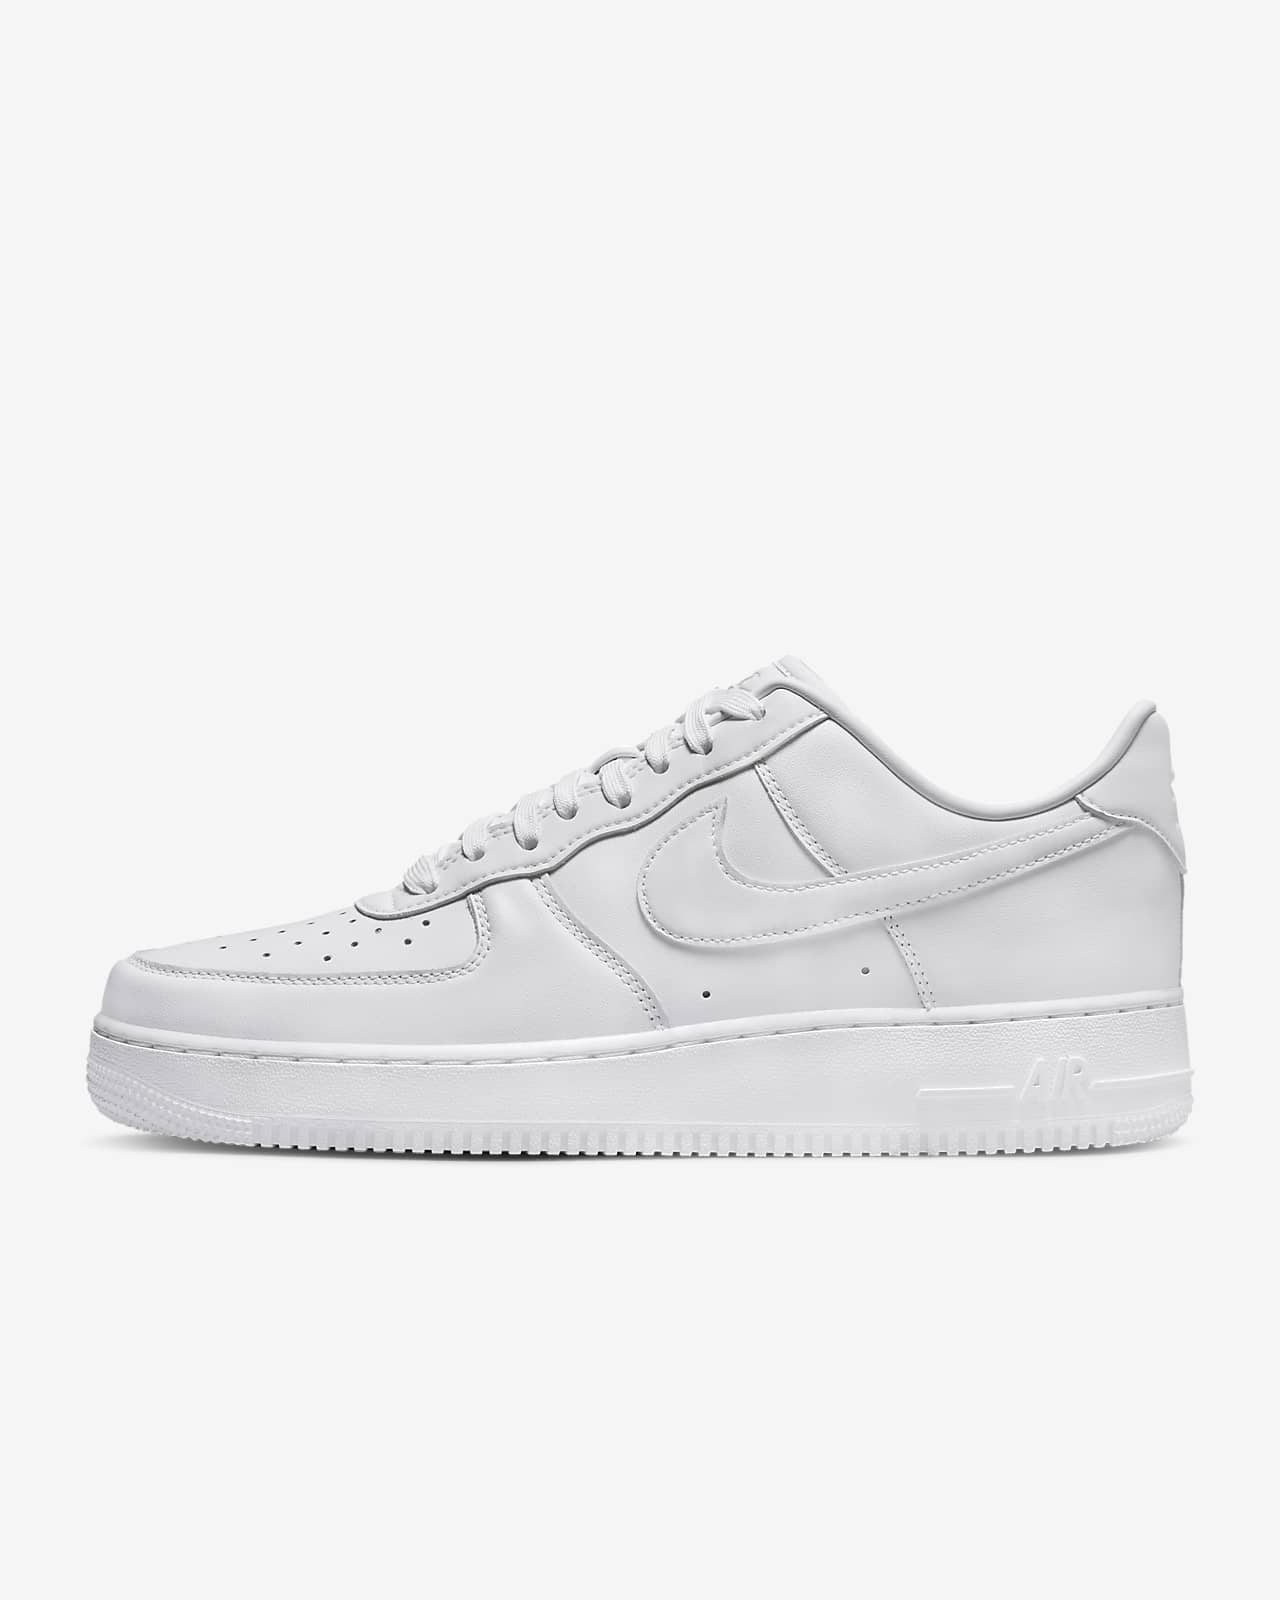 Nike Air Force 1 07 Men's Shoes White/White India